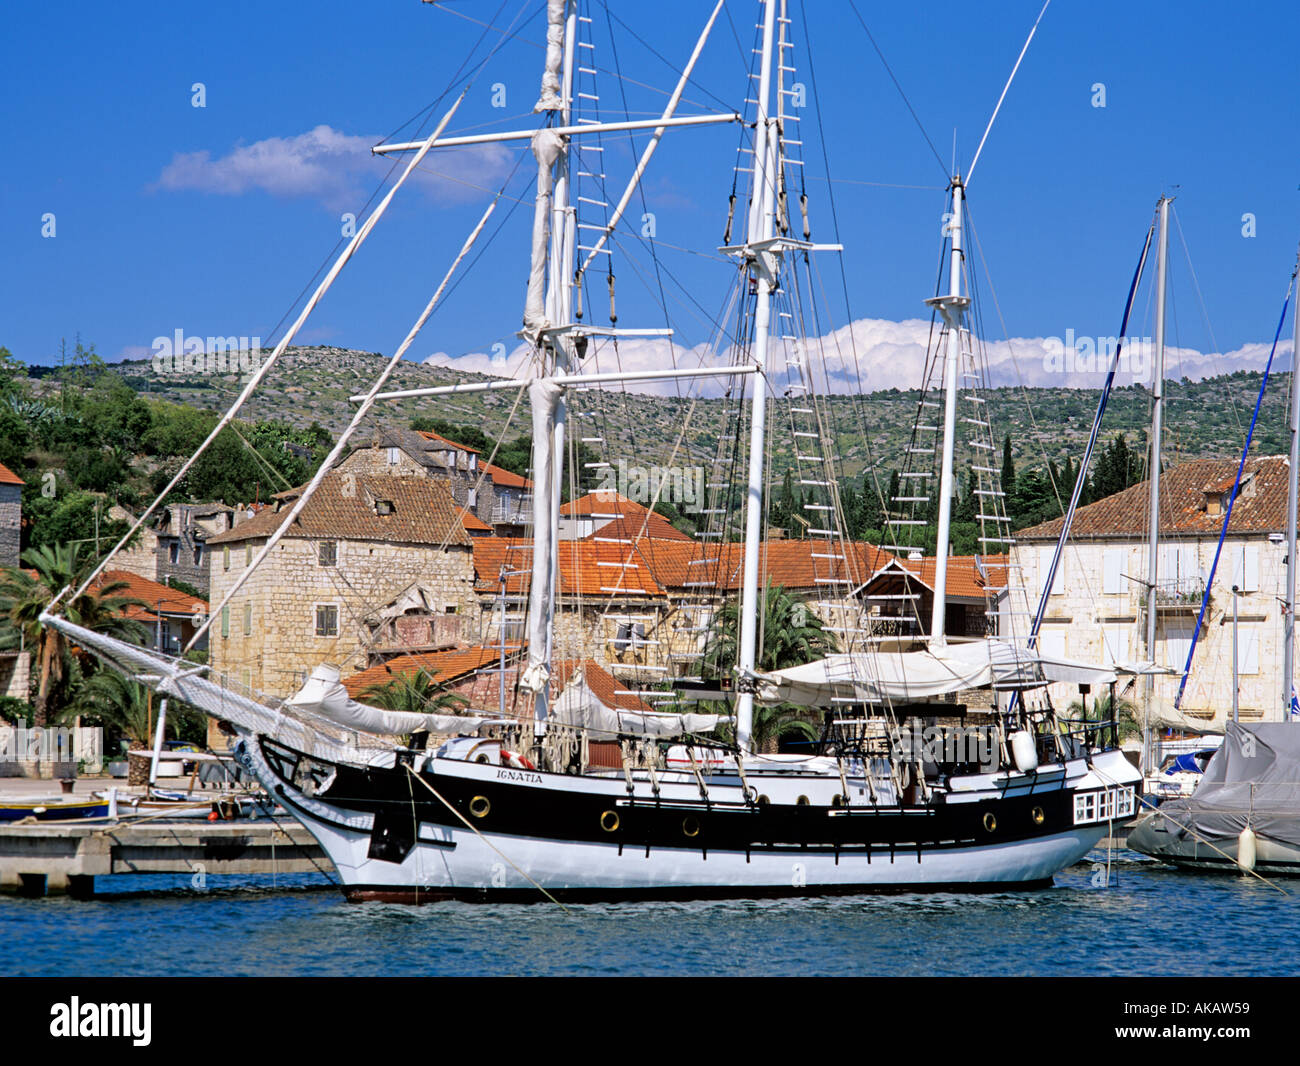 Old ship in harbour Croatia Europe Adriatic Stock Photo